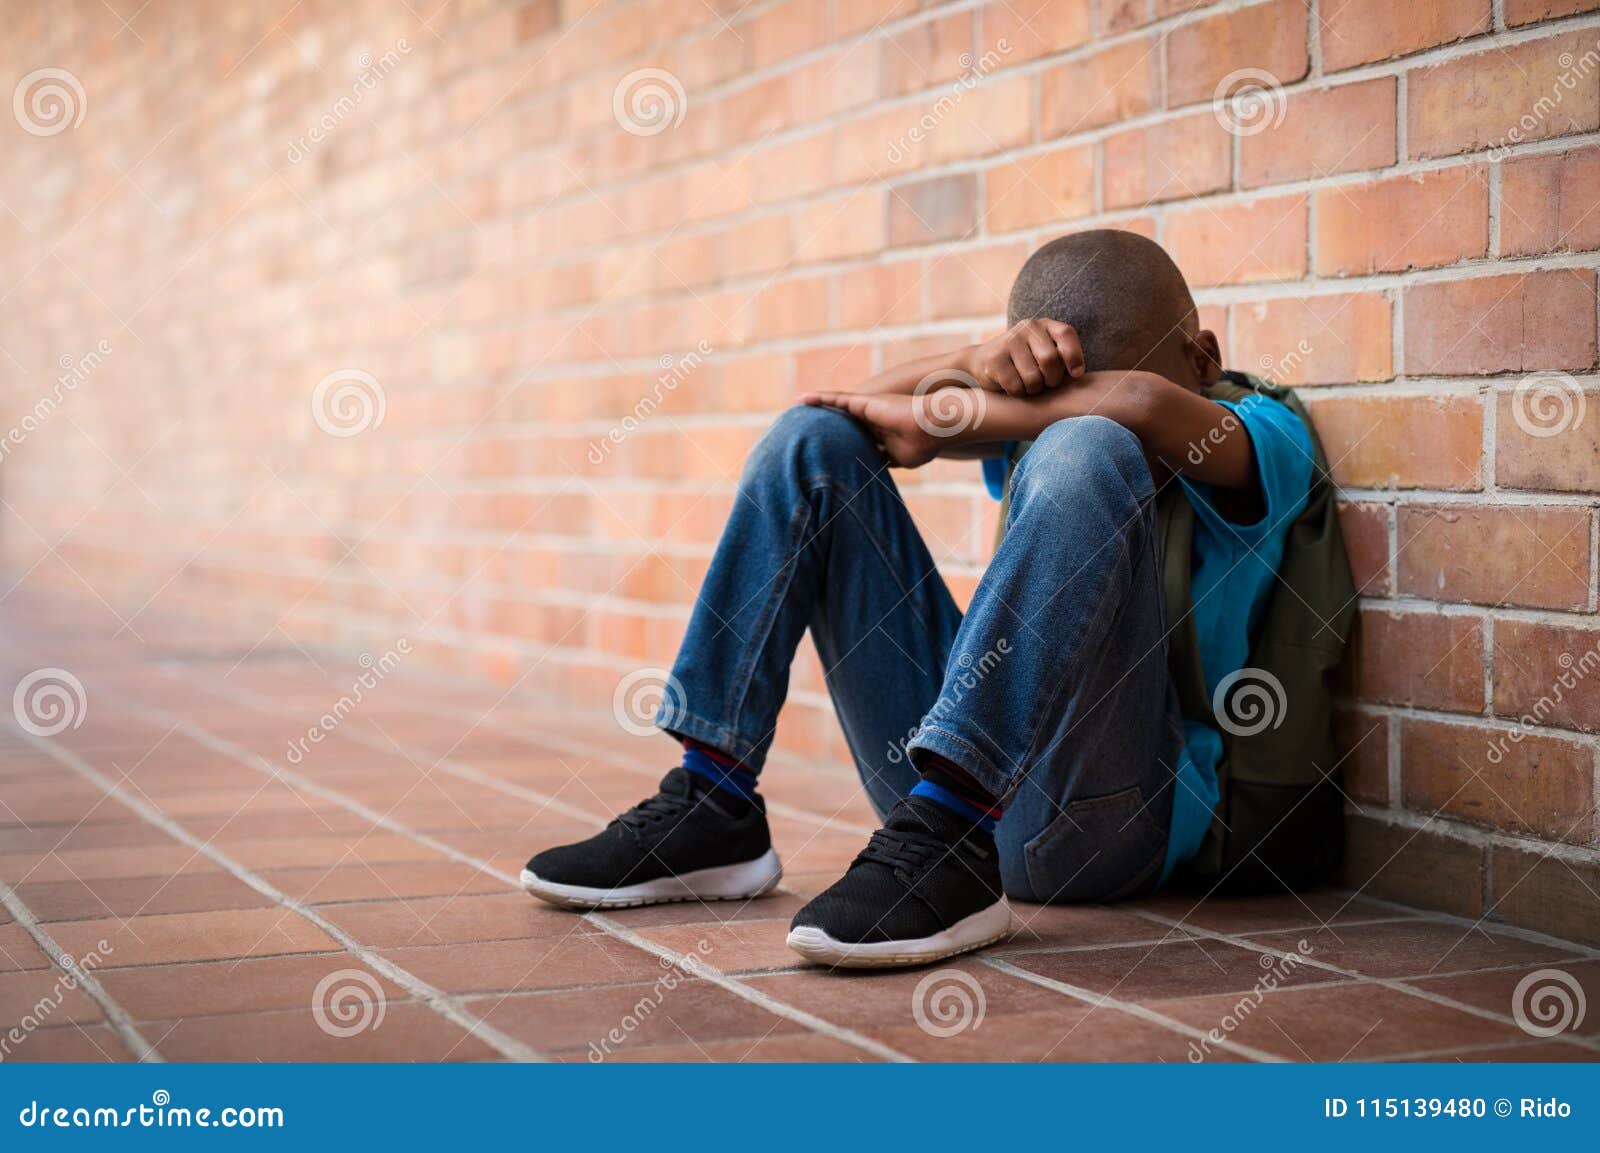 young sad boy at school